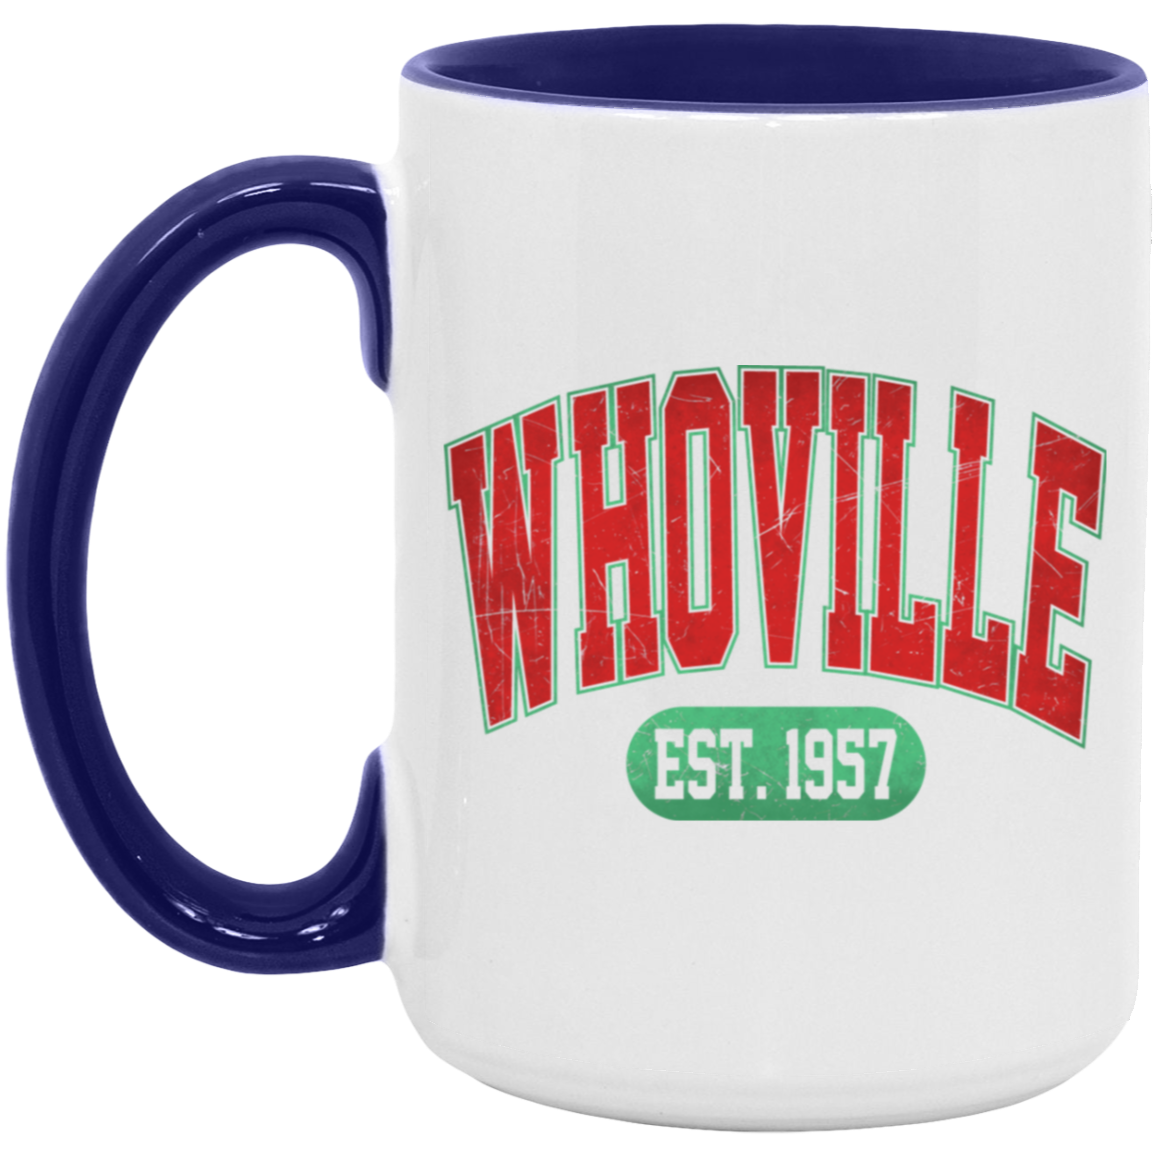 Whoville Est 1957 15 oz Coffee Mug